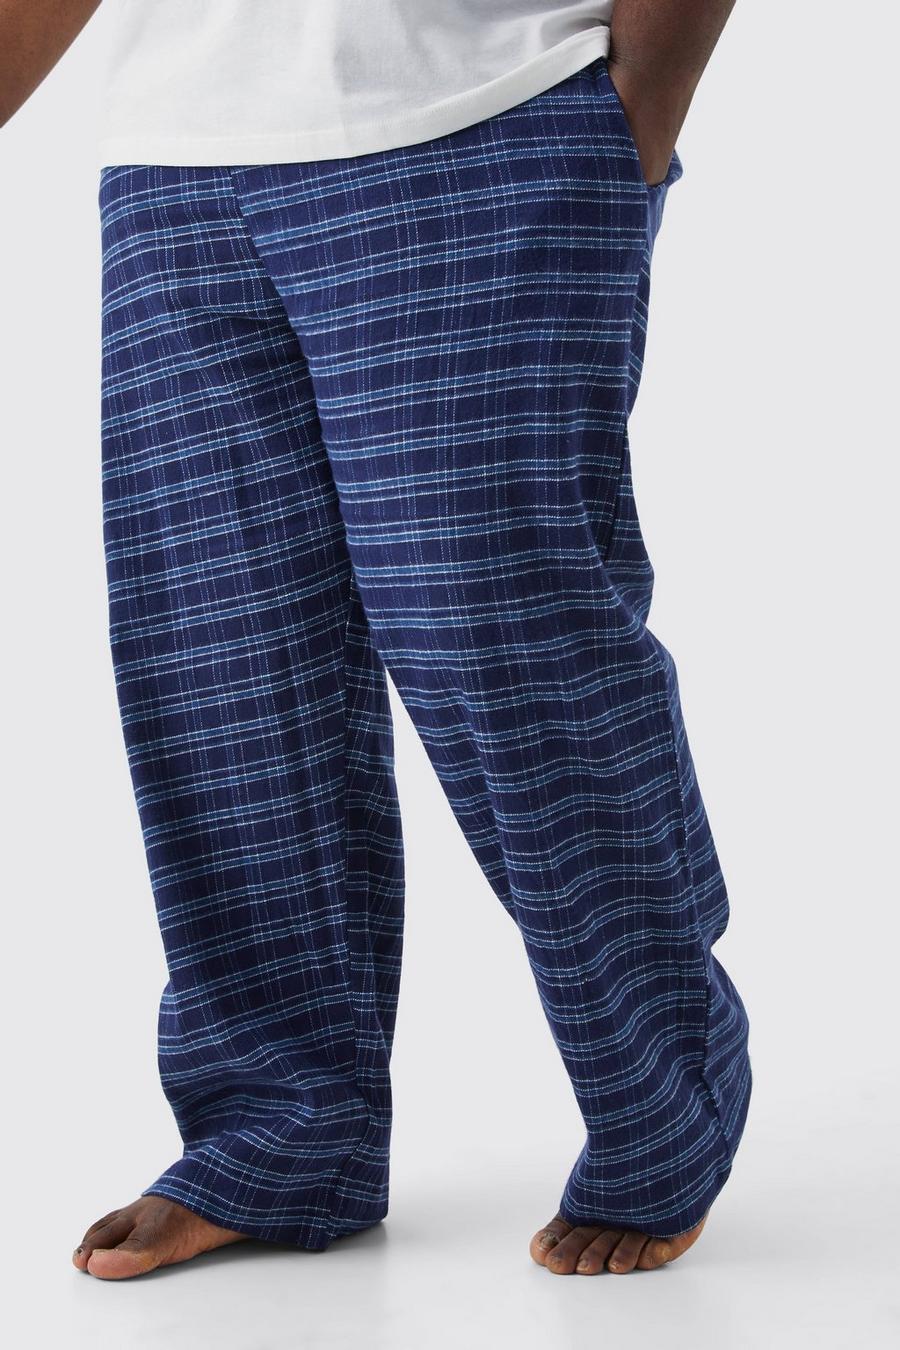 Pantaloni del pigiama Plus Size a quadri, Navy azul marino